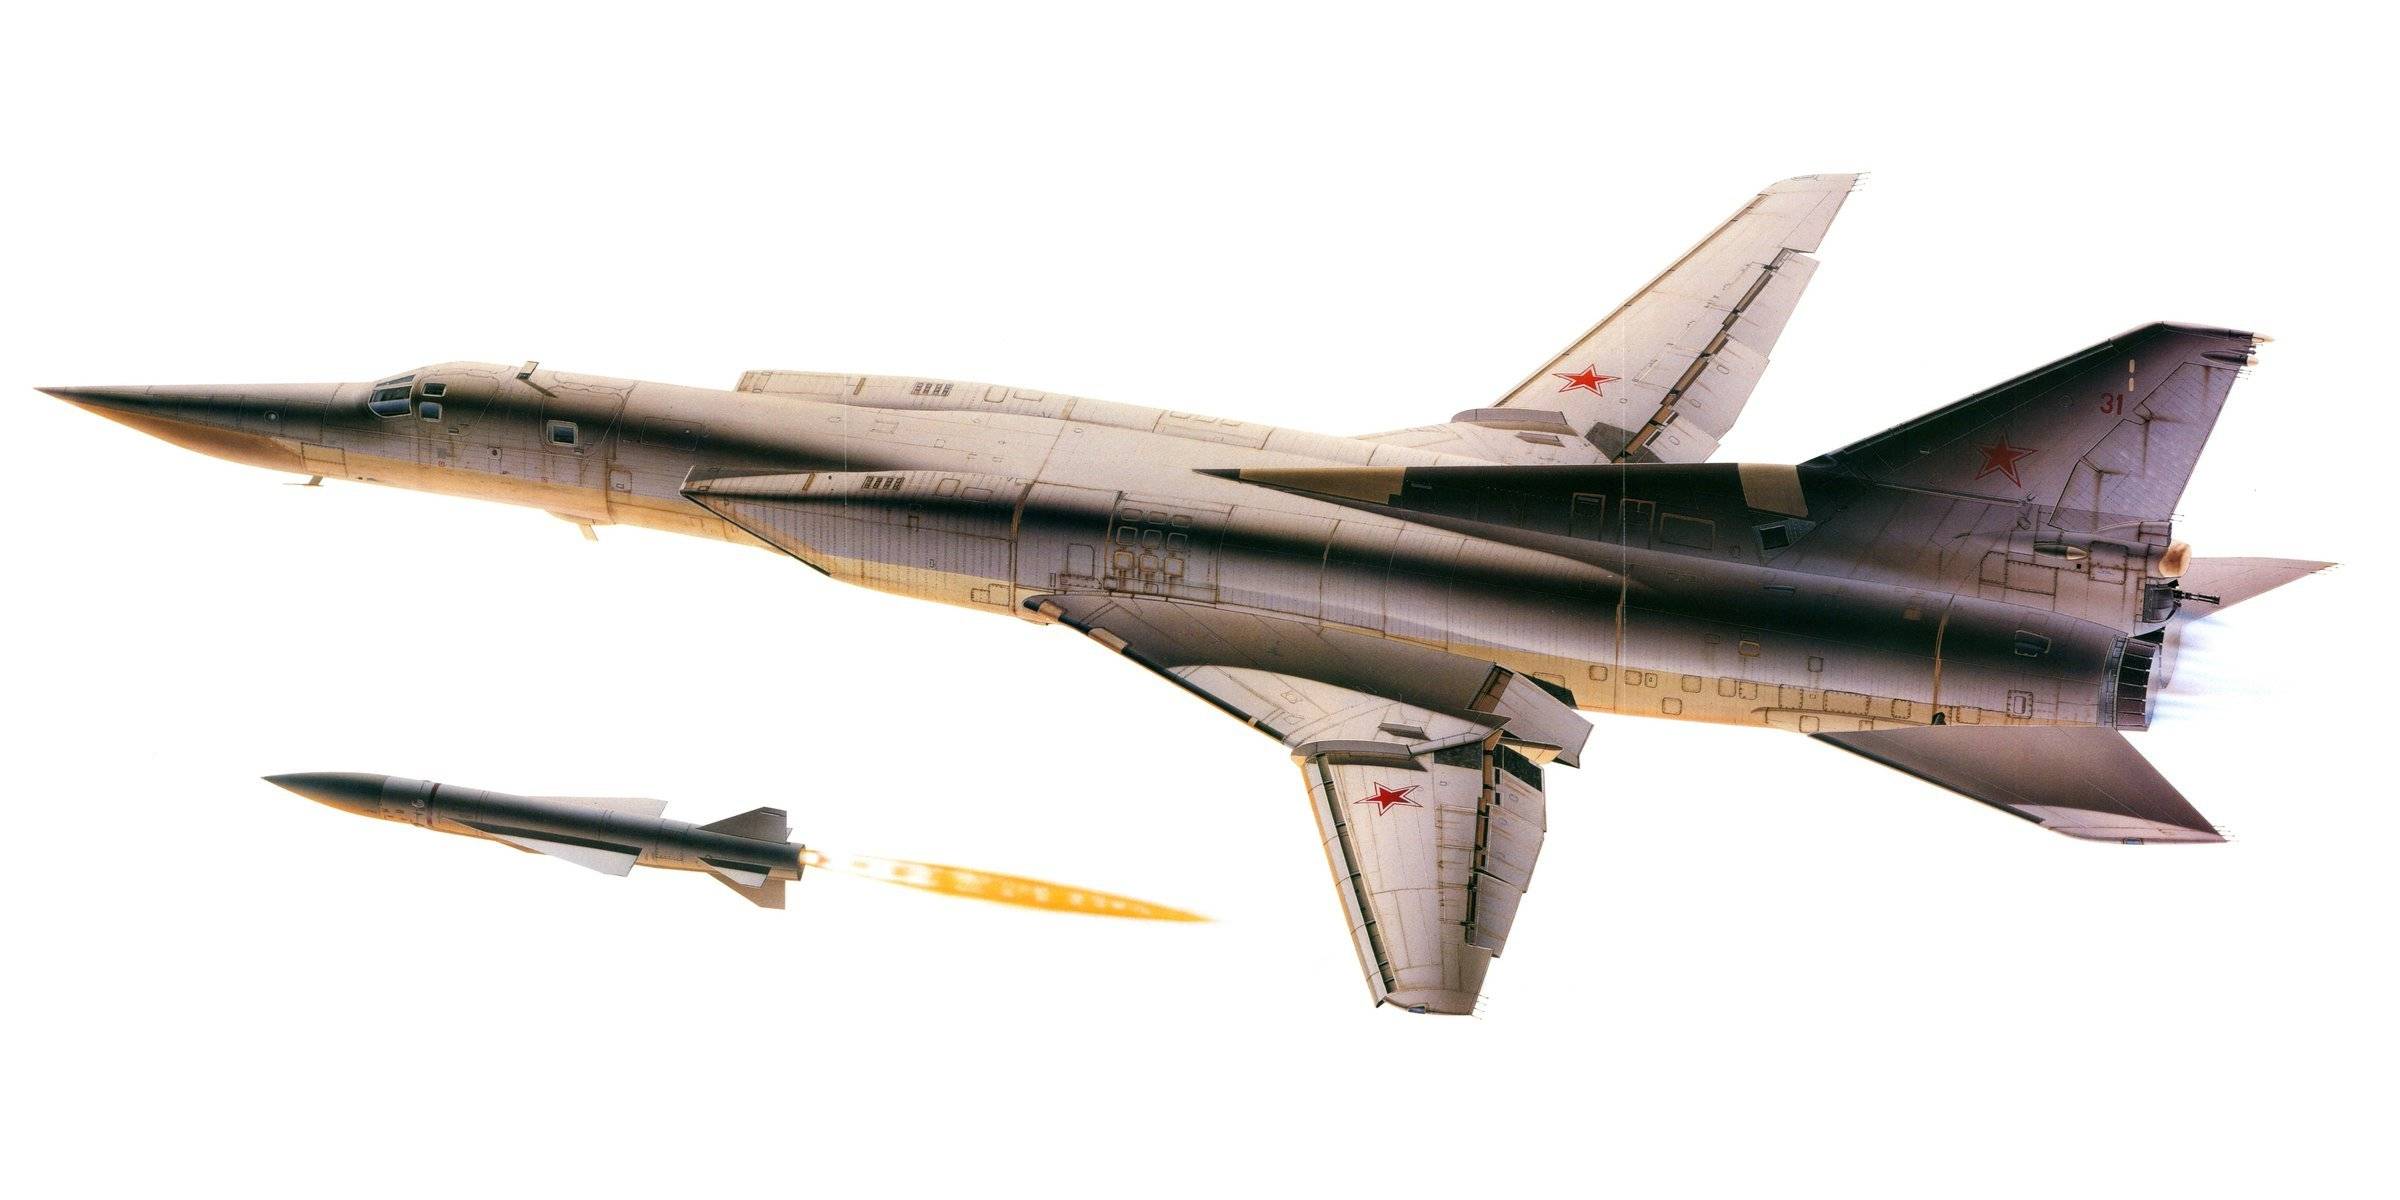 Самолёт ту-22 - стратегический бомбардировщик